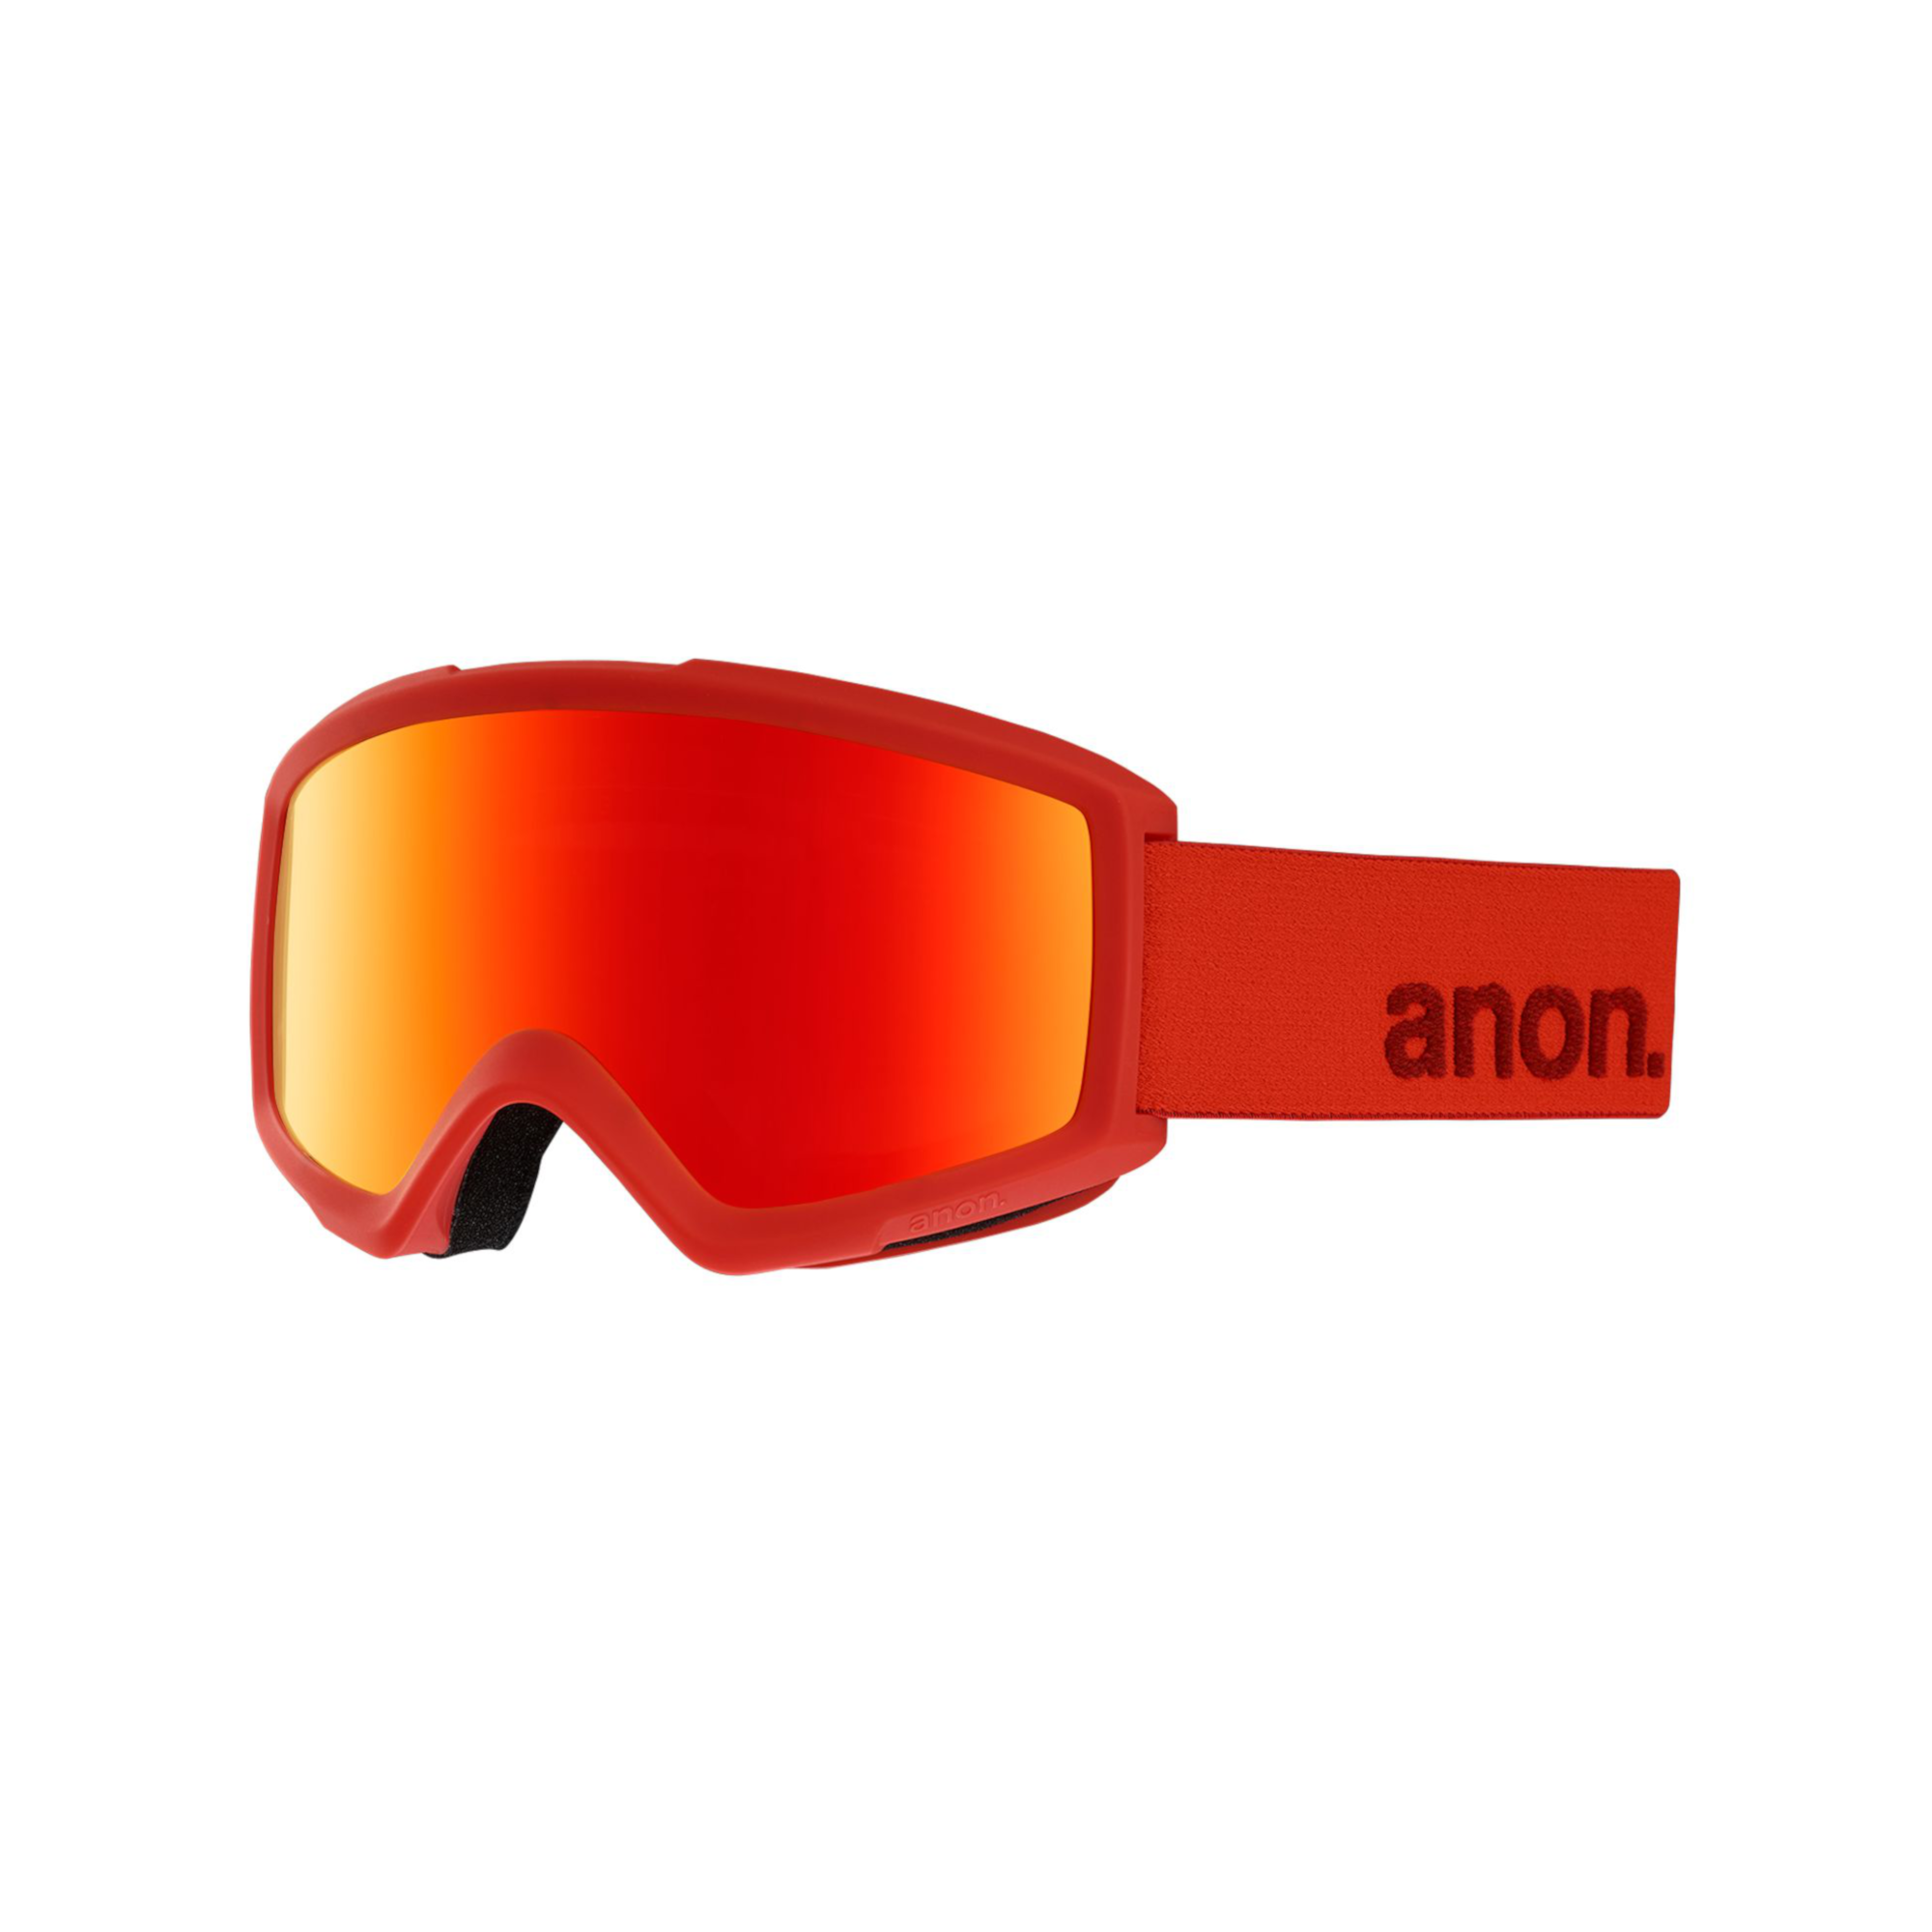 Masque de Ski Helix 2.0 - Red - Sonar Red + Amber